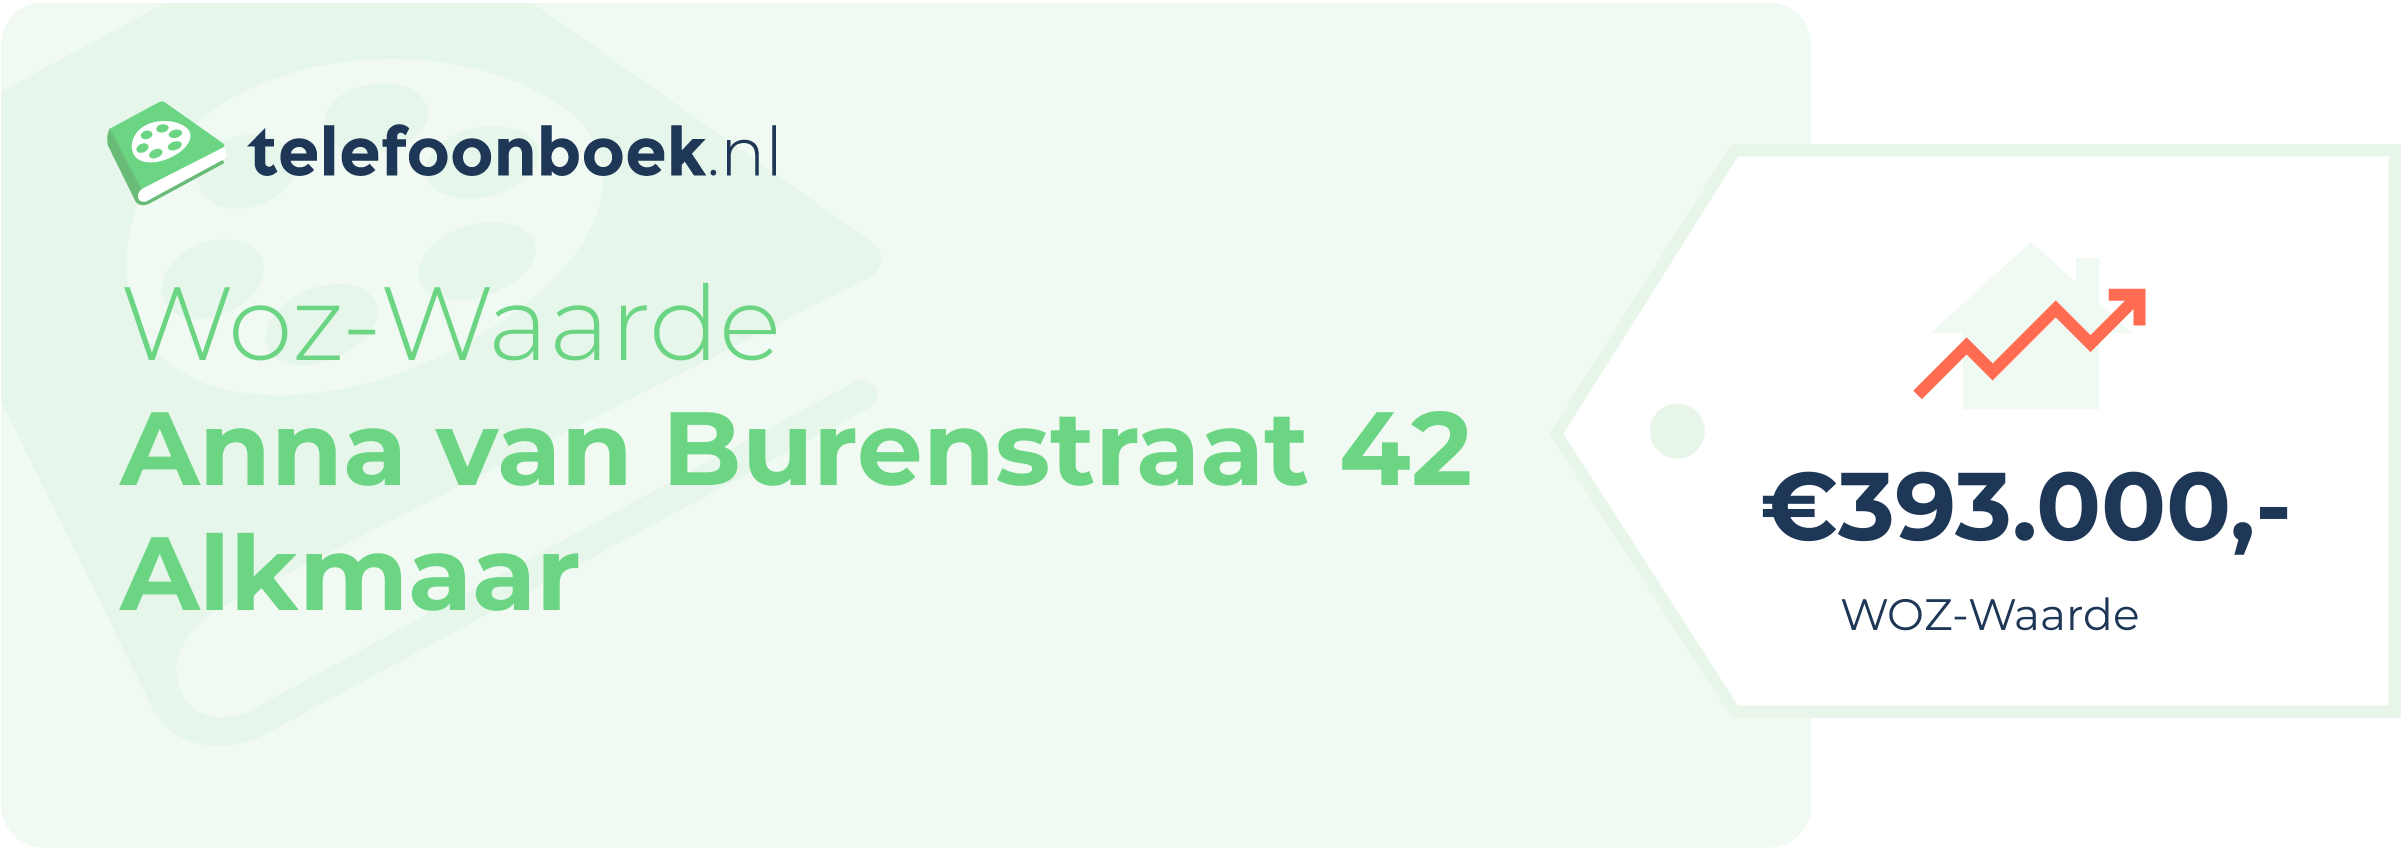 WOZ-waarde Anna Van Burenstraat 42 Alkmaar